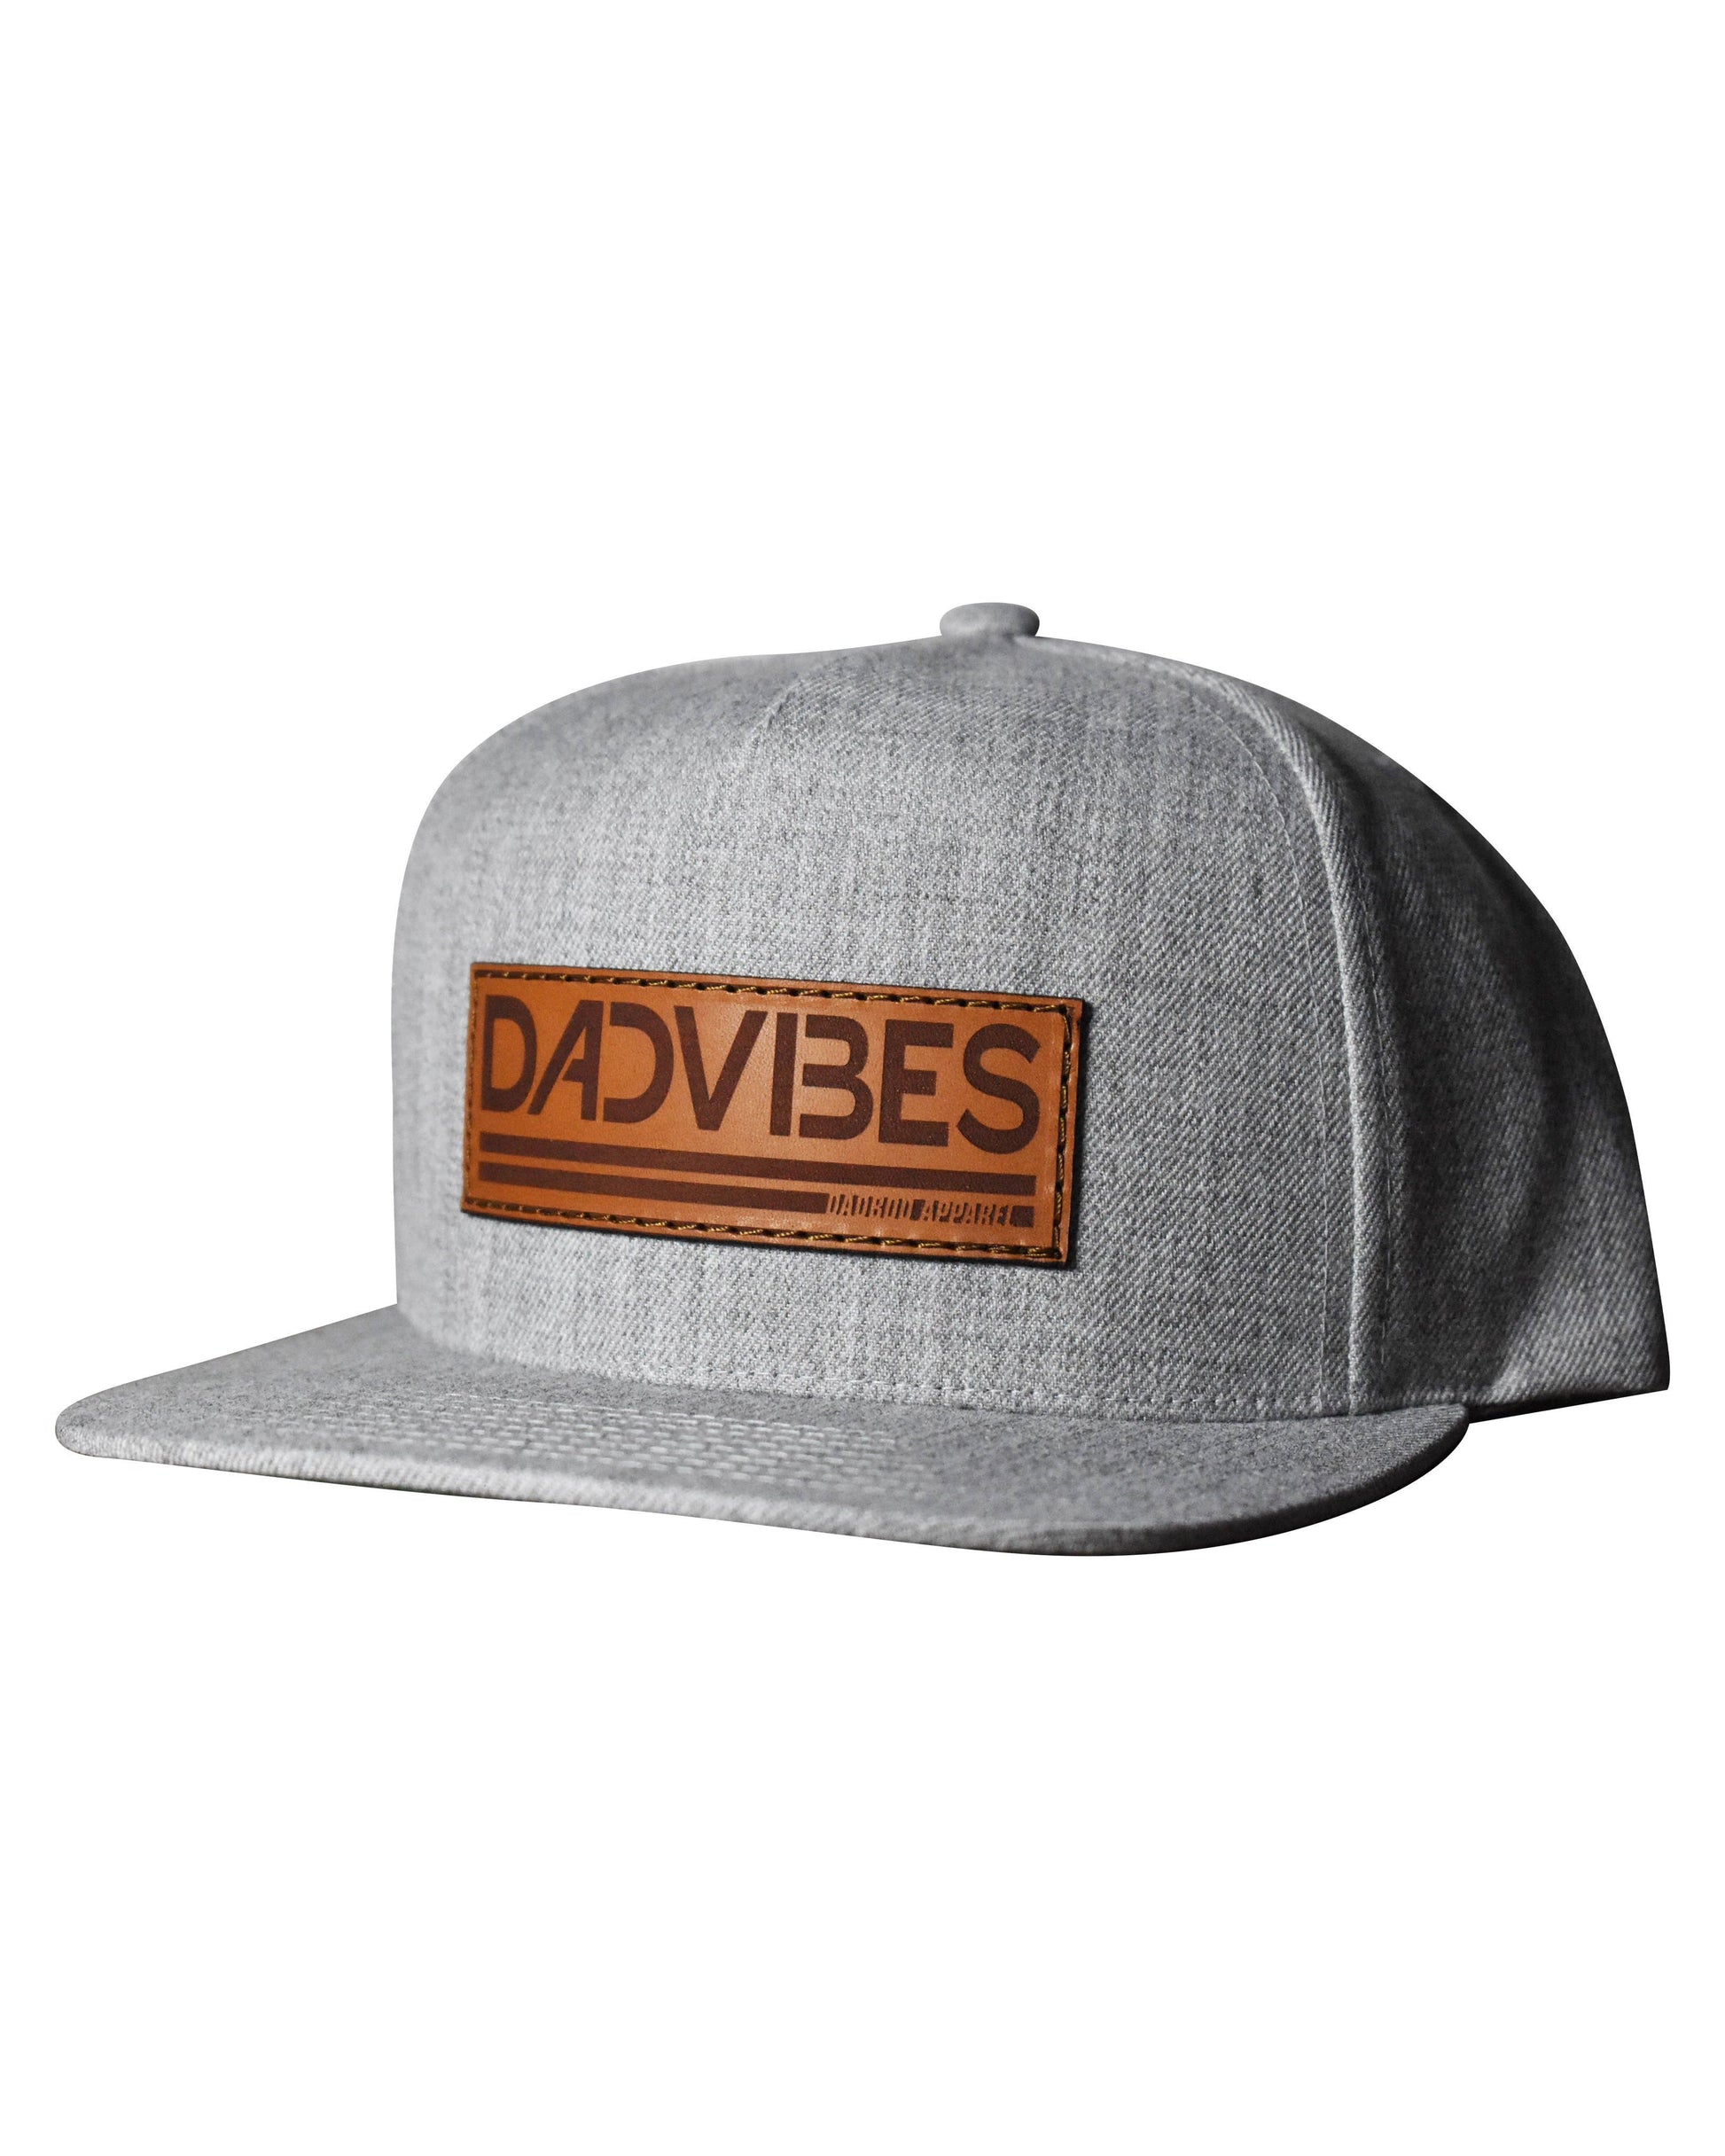 DadVibes Classic - Snapback (Heather Grey) - Nubian Lane Hat Co. 